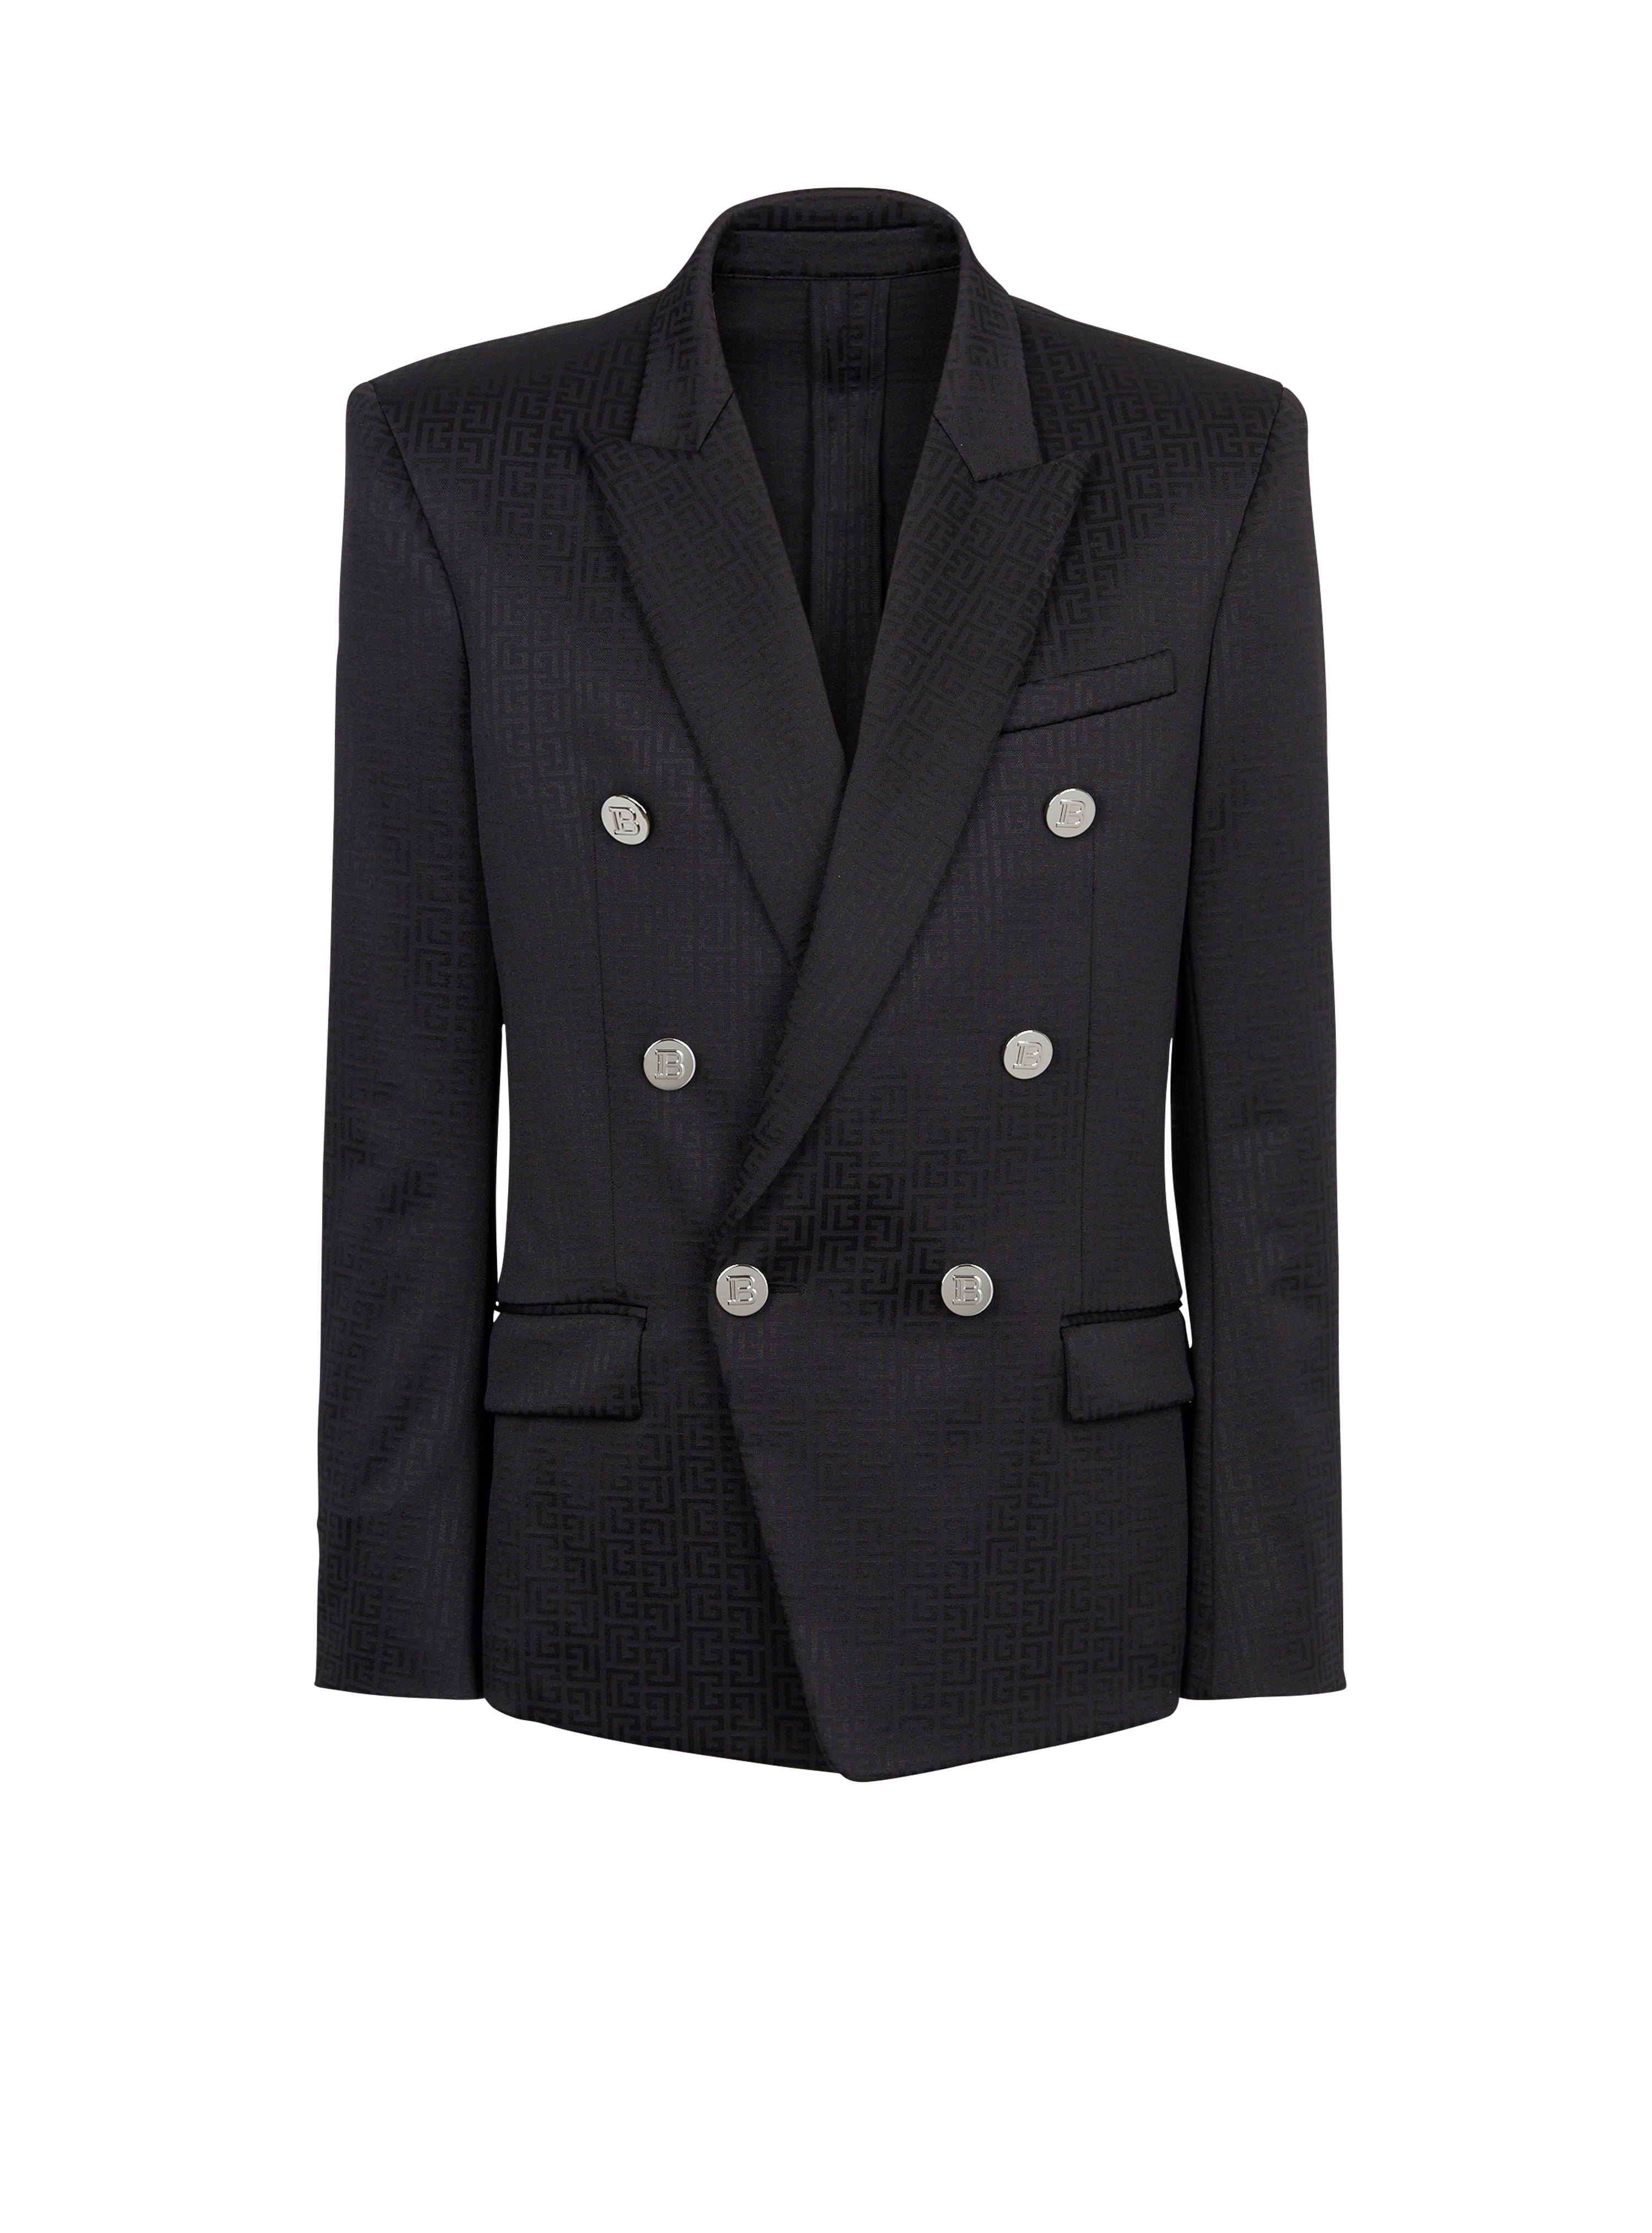 Jersey double-breasted blazer with Balmain monogram print, black